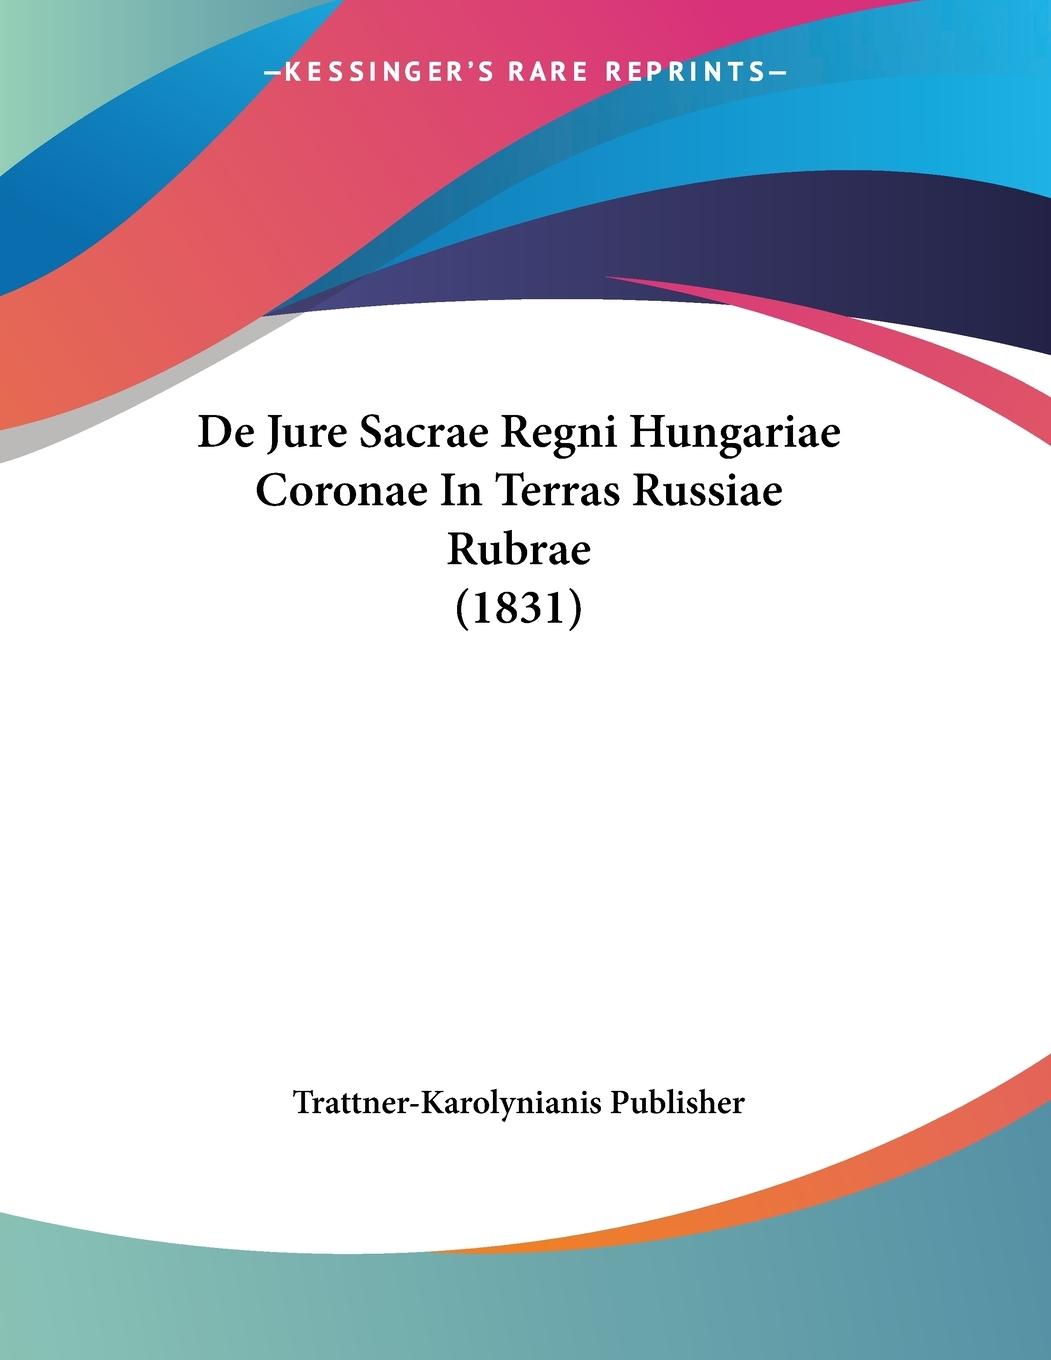 De Jure Sacrae Regni Hungariae Coronae In Terras Russiae Rubrae (1831) - Trattner-Karolynianis Publisher